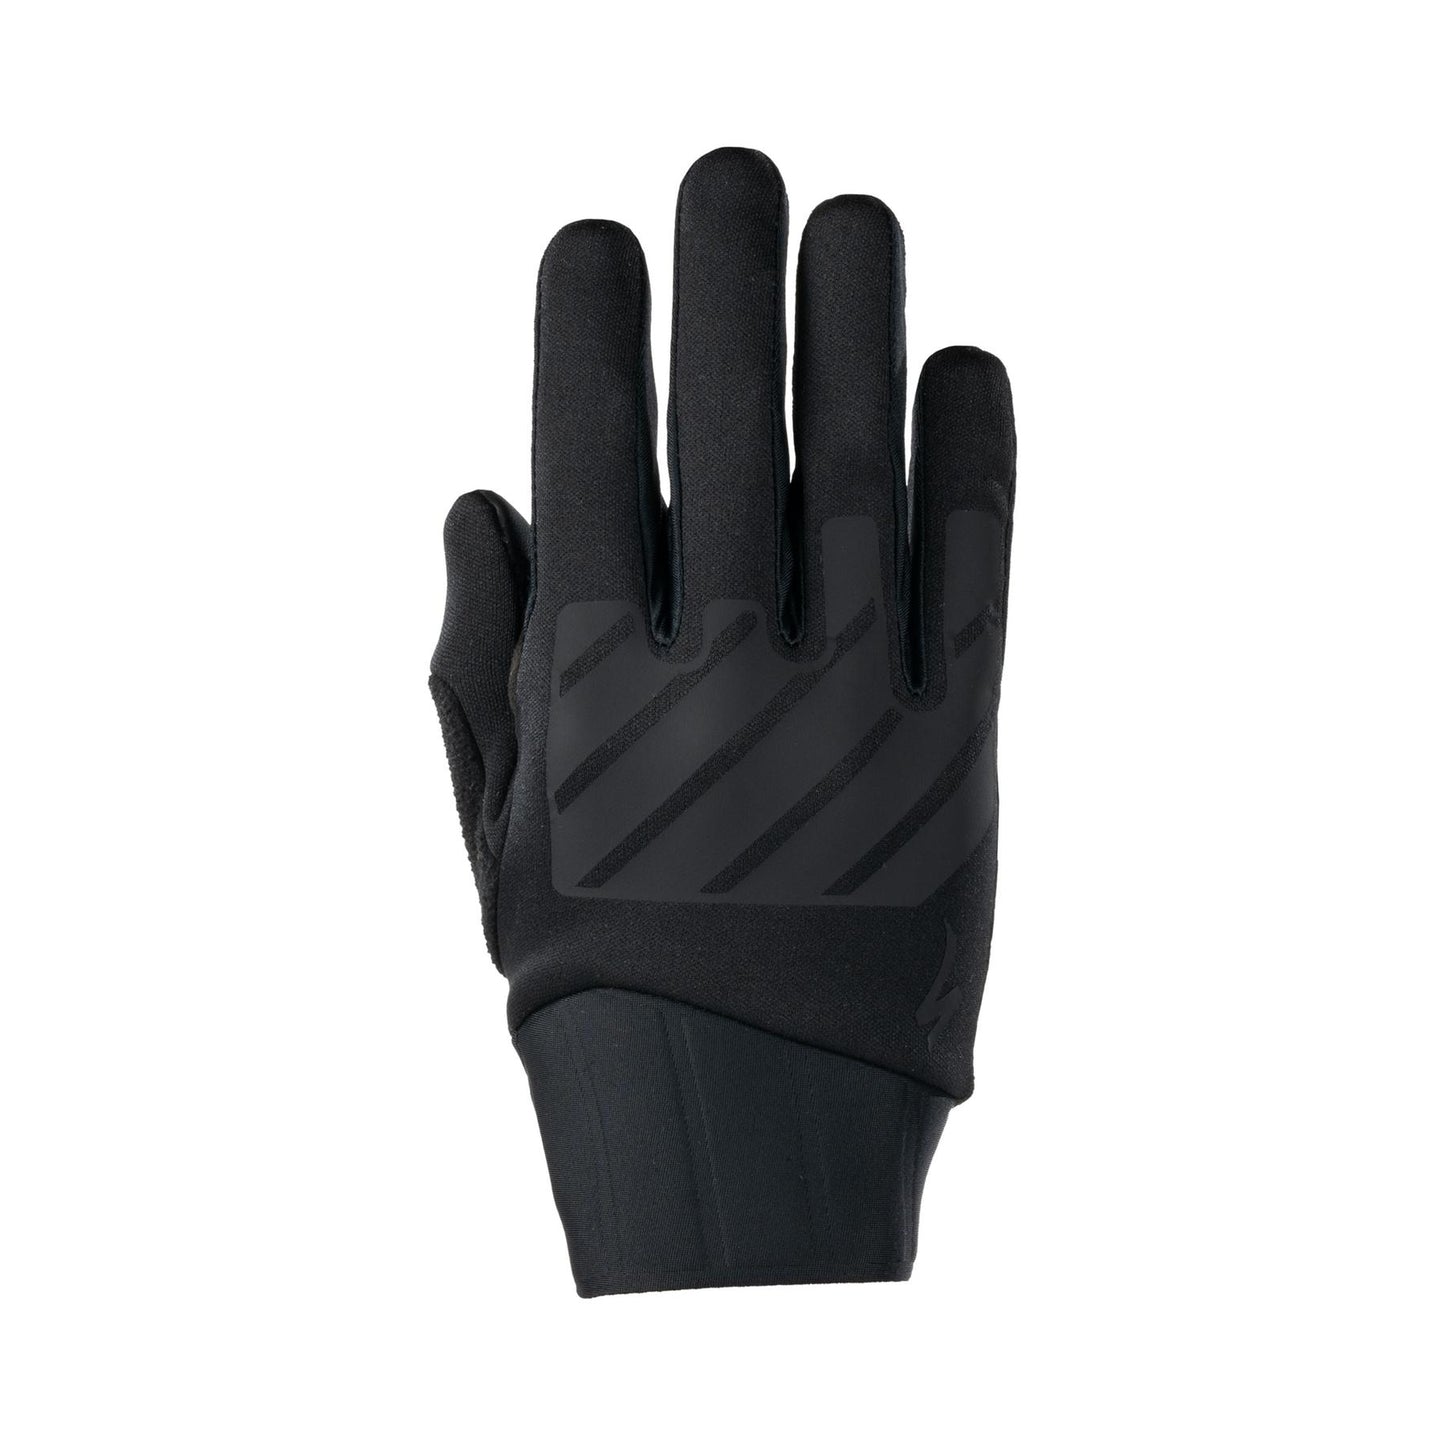 MenÕs Softshell Thermal Glove in Black